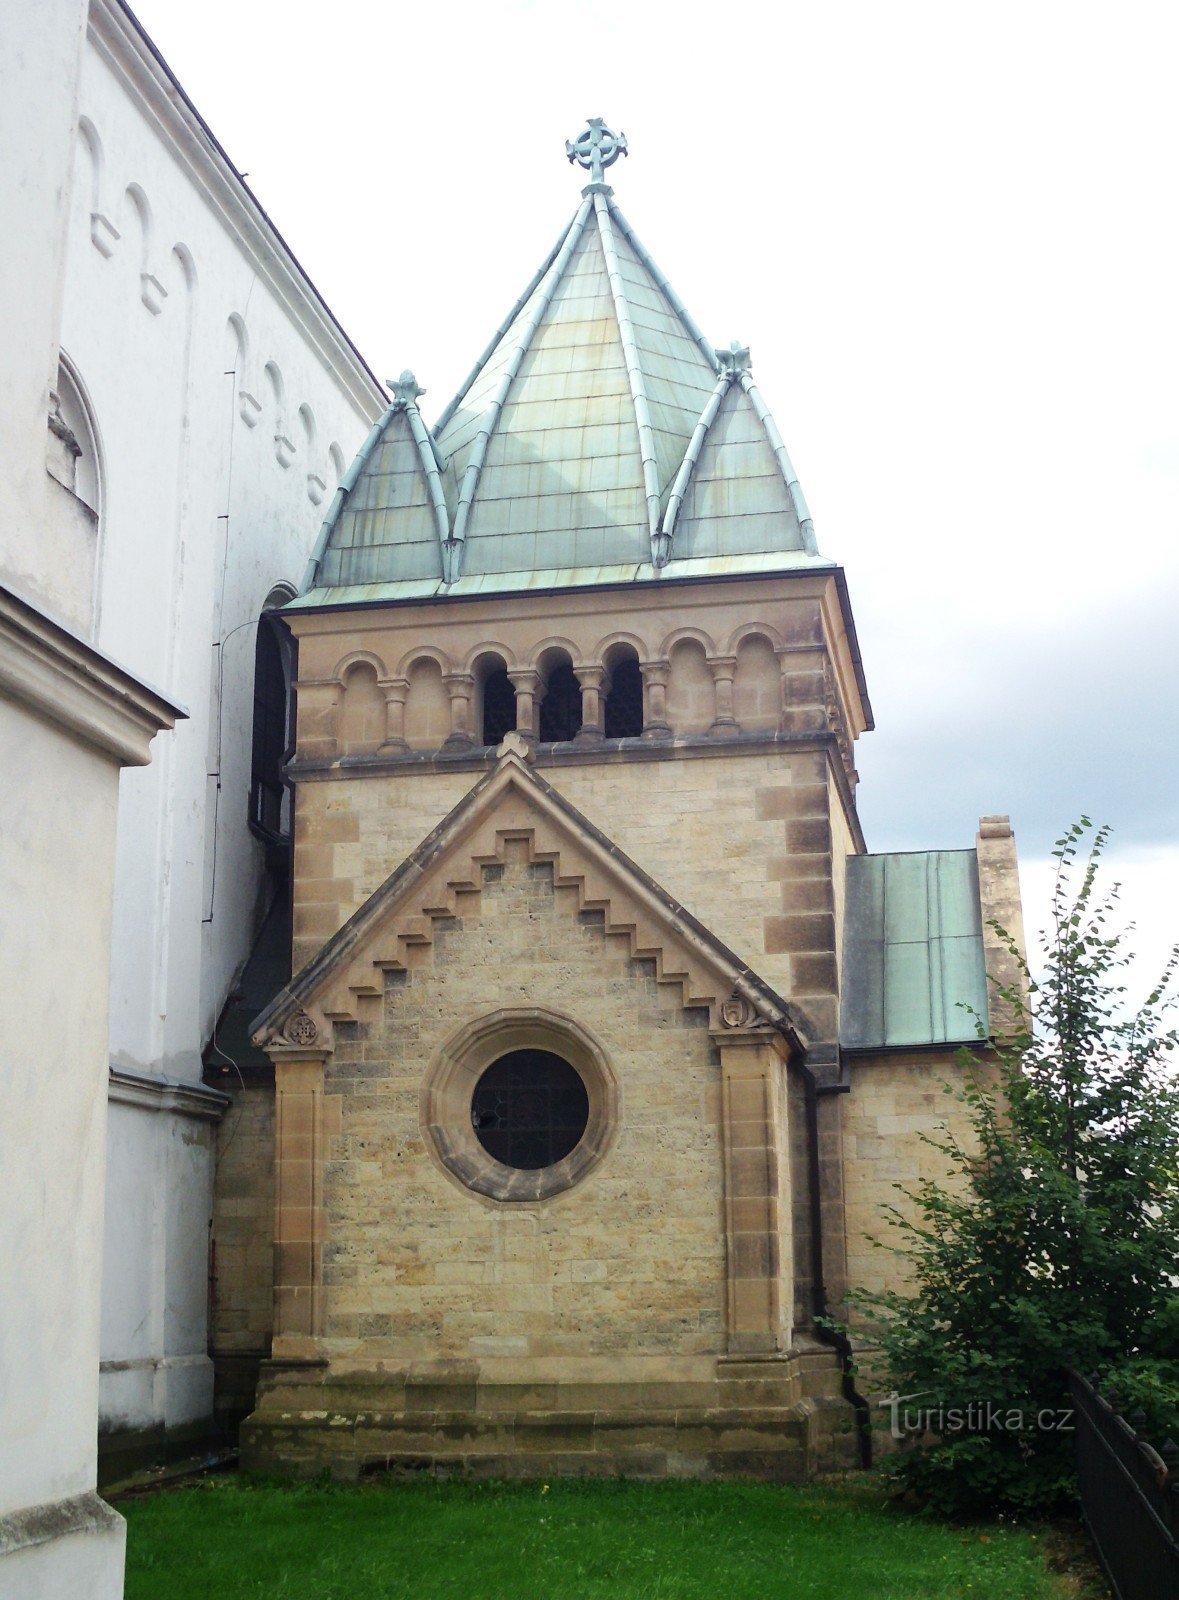 Čakovice (Praga) - Kościół św. Remigia